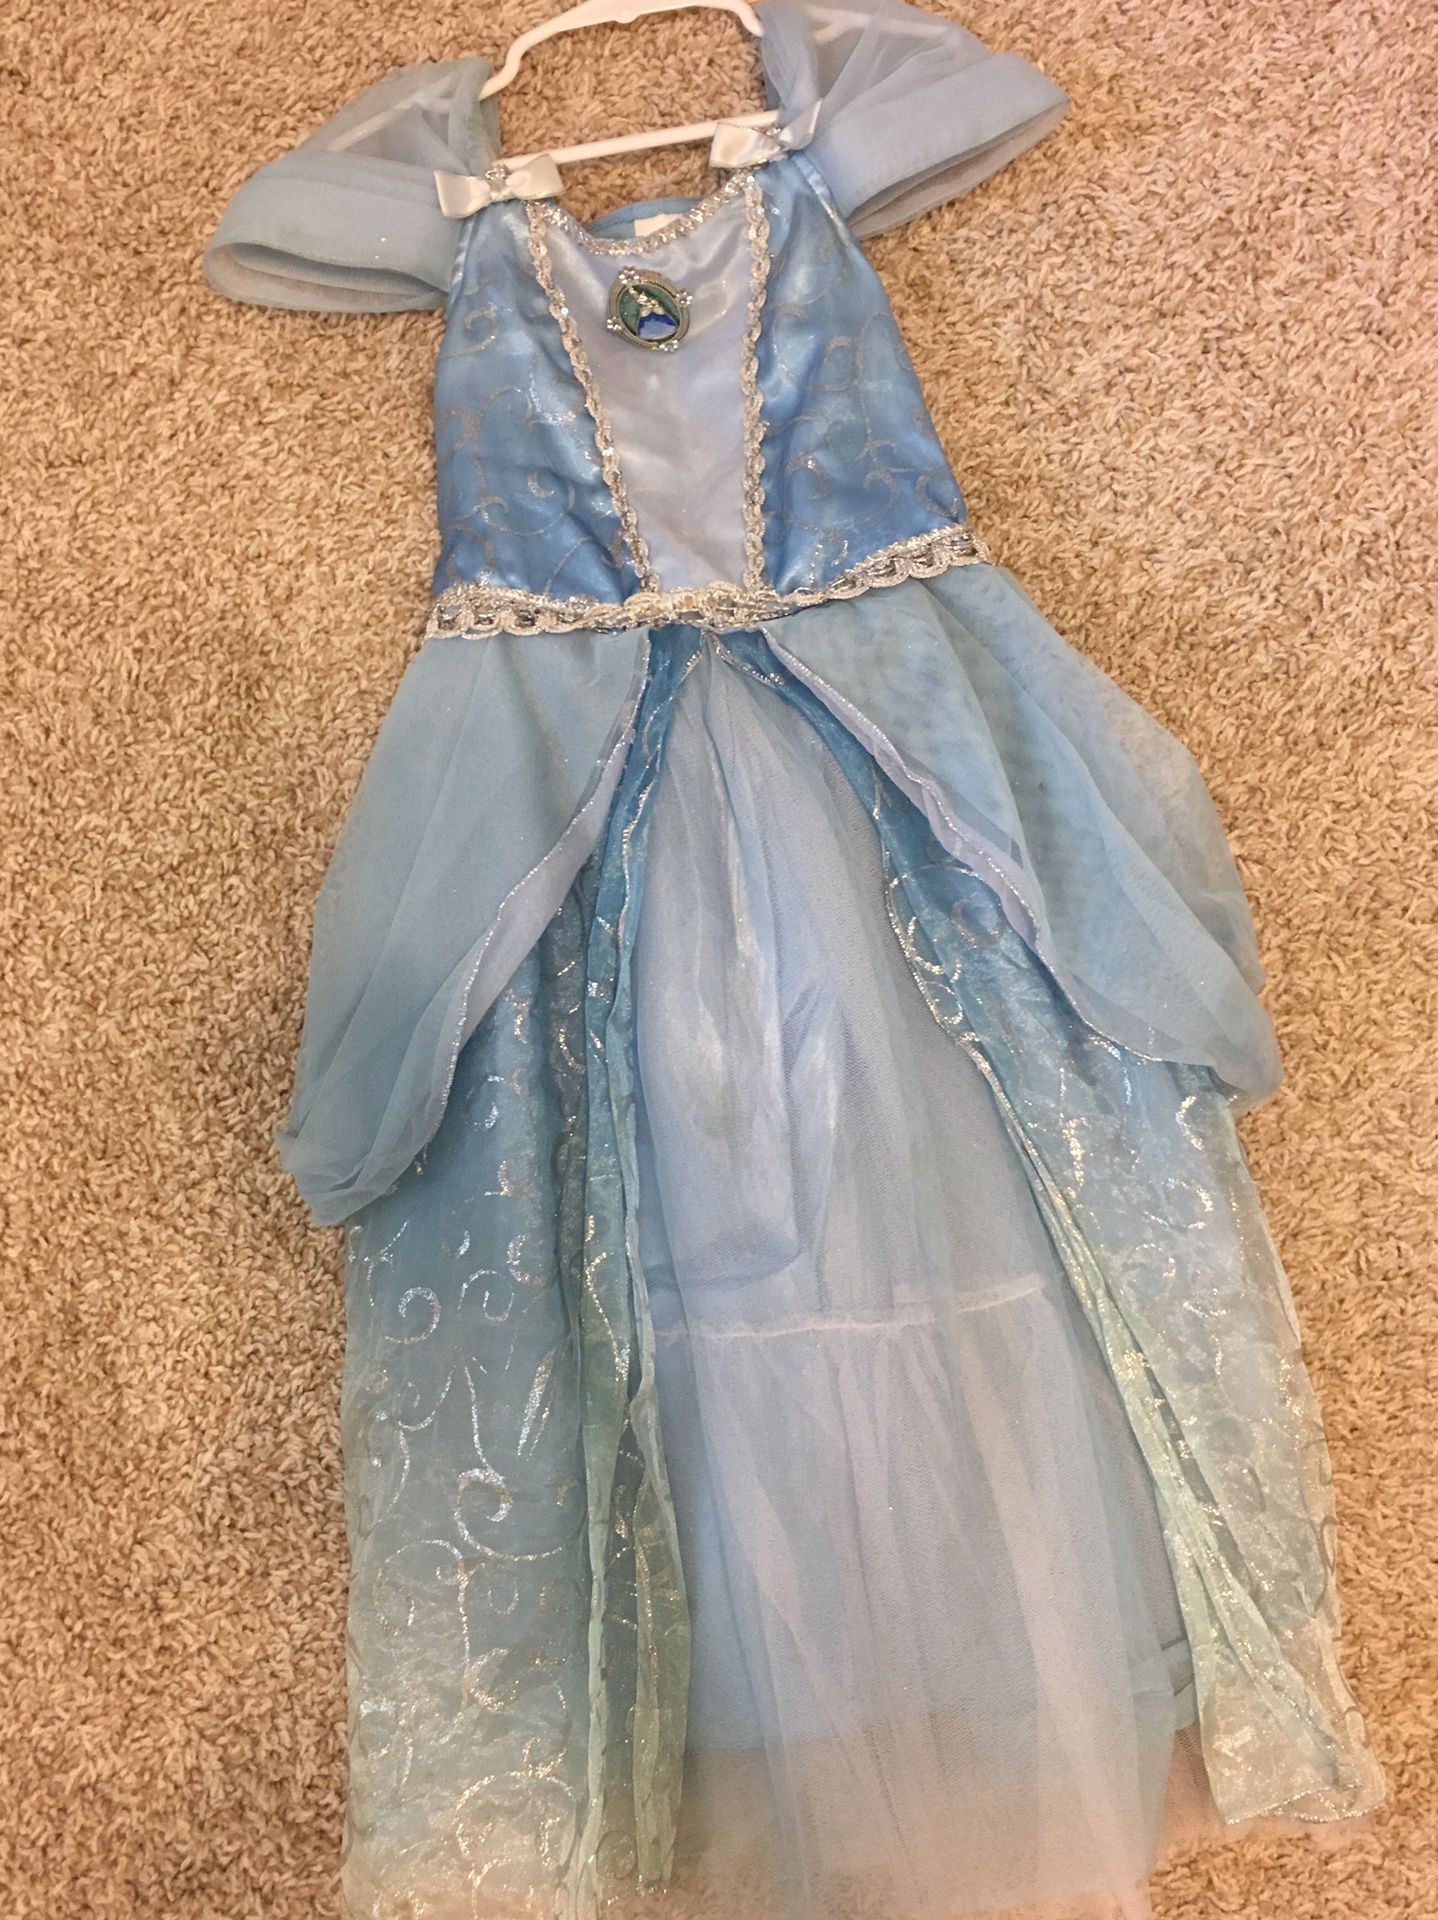 Disney Store Cinderella Costume-size 4